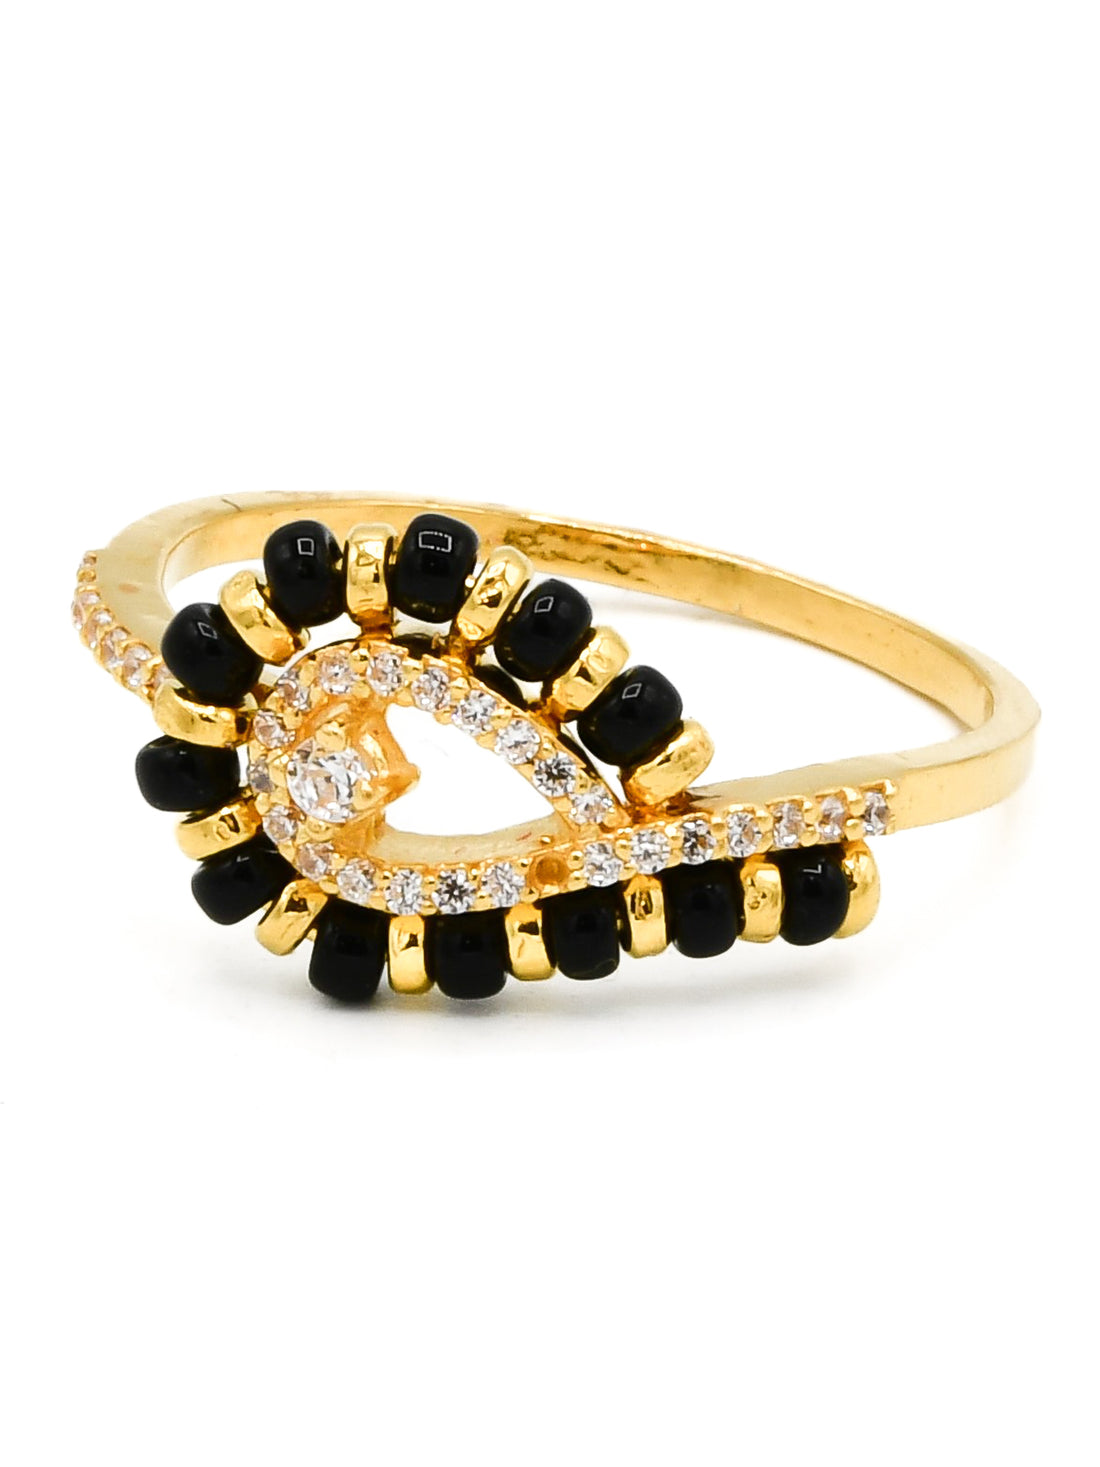 22ct Gold Black Beads CZ Ladies Ring - Roop Darshan